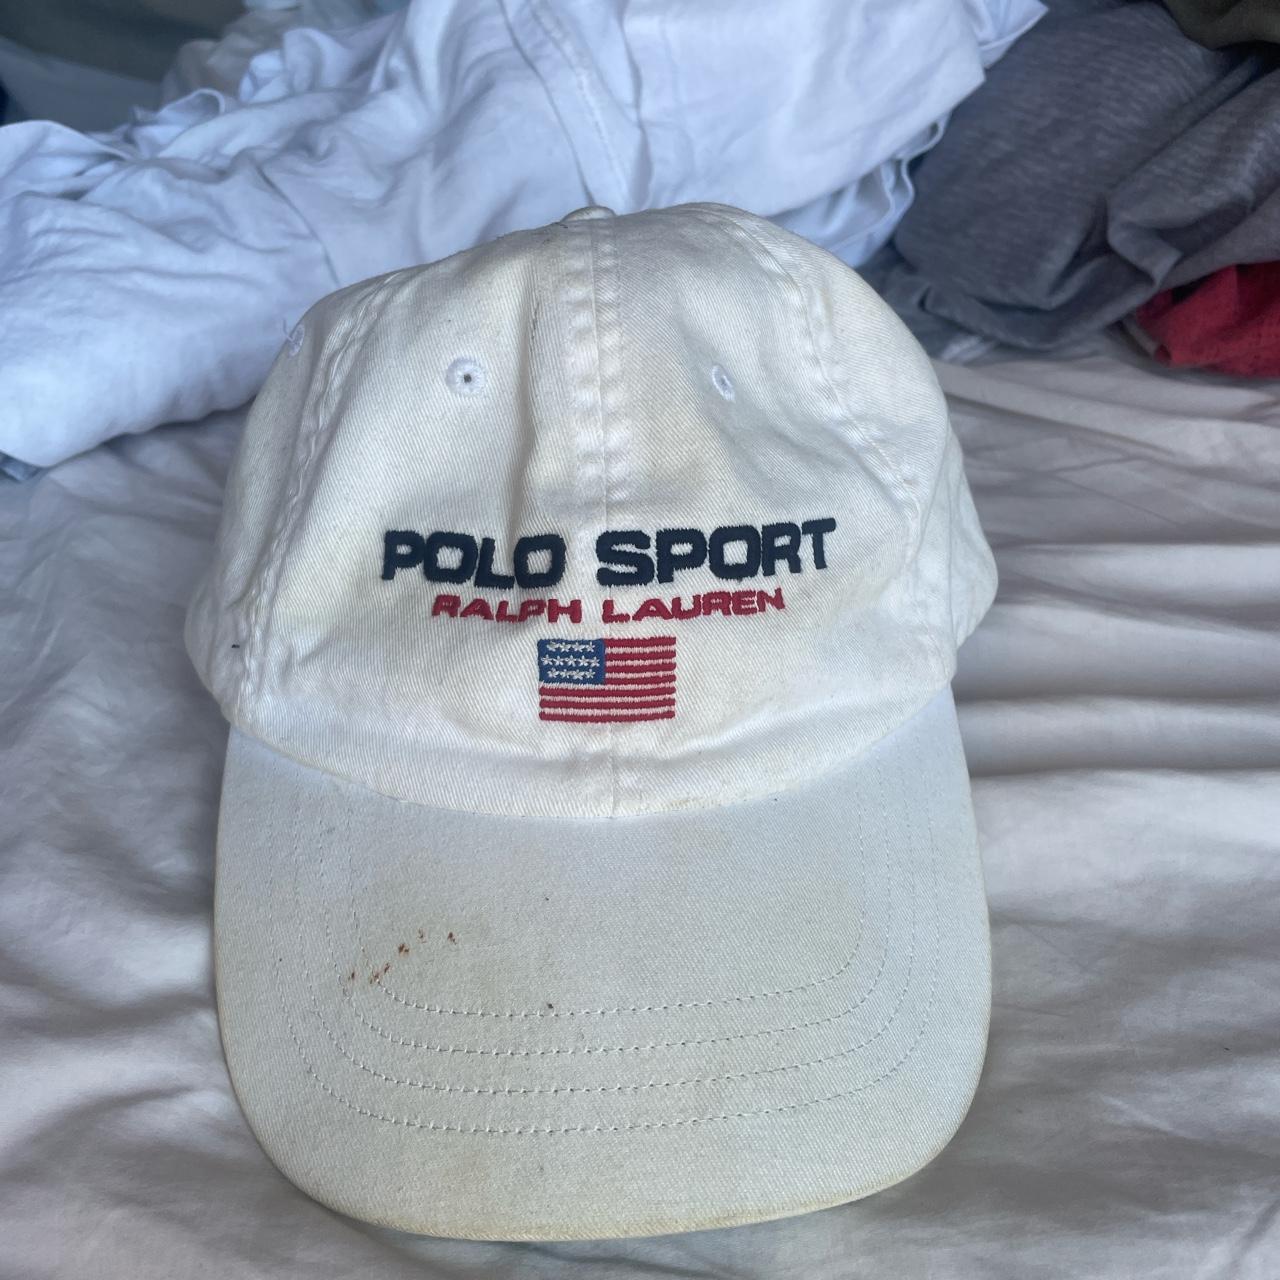 Polo sport Ralph Lauren cap - 7/10 condition - msg... - Depop